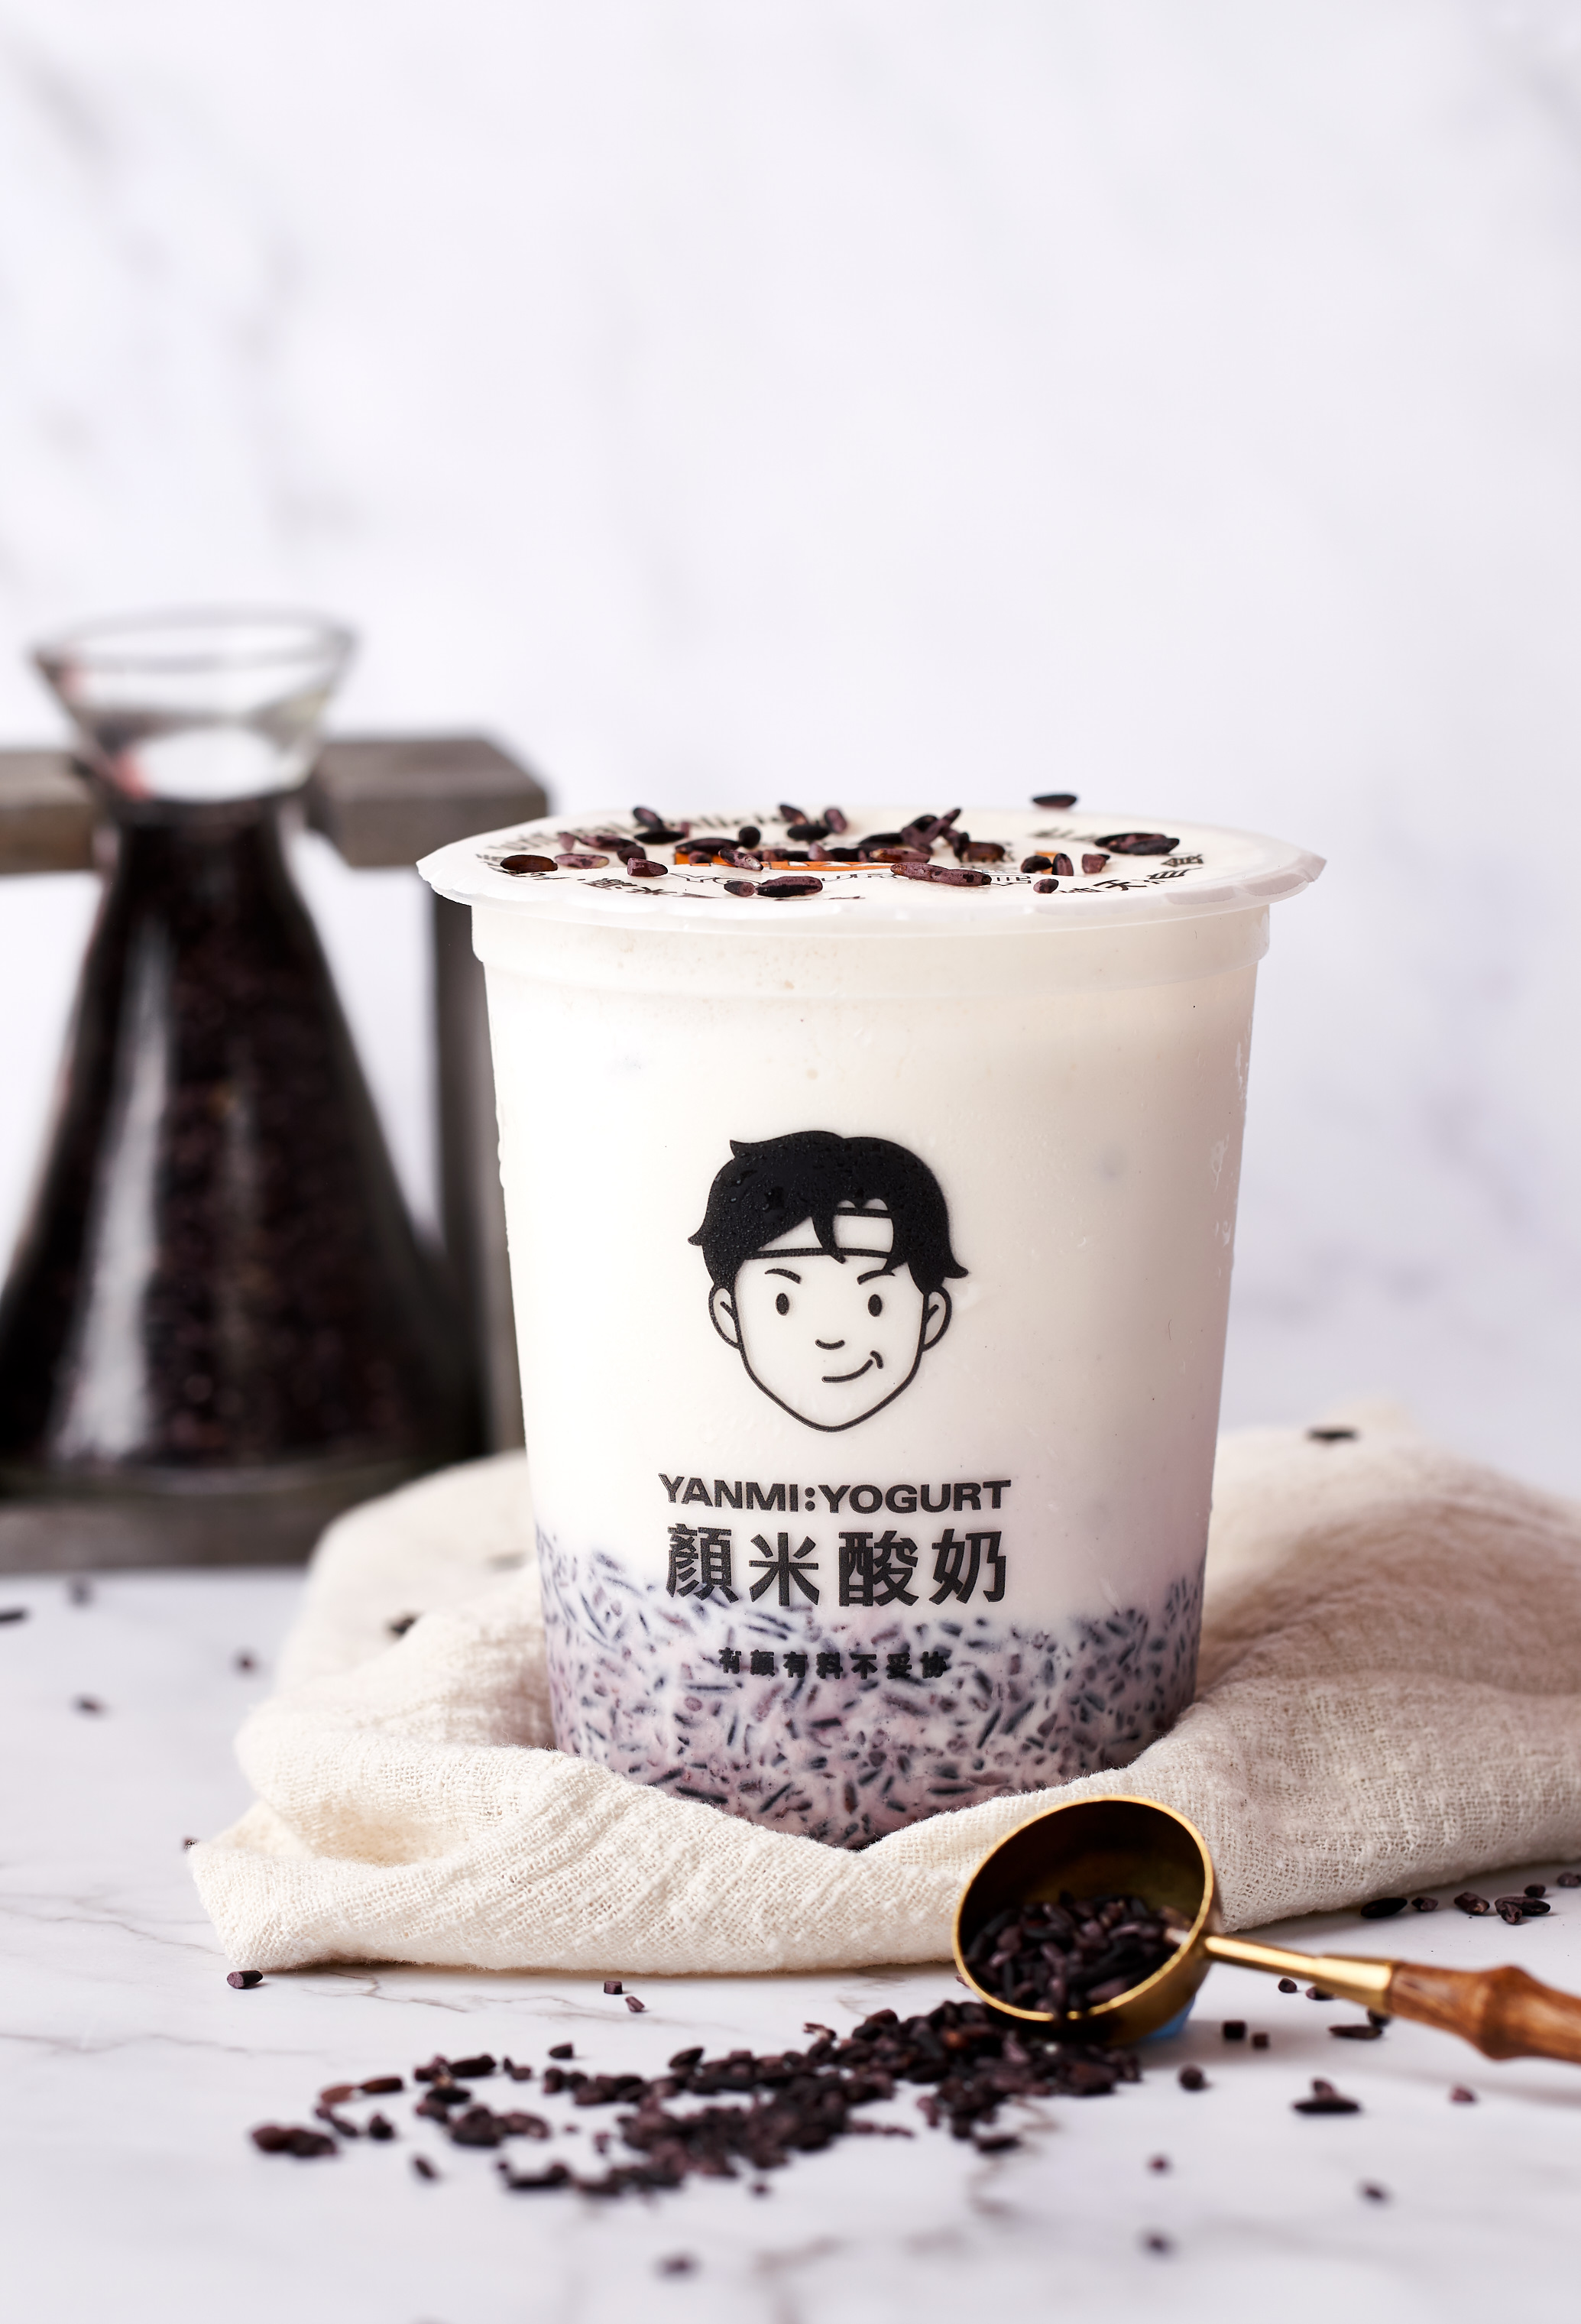 Popular yogurt drink store, Yanmi Yogurt (颜米酸奶), to offer 1-for-1 yogurt drinks from 26 to 28 Oct 19 - 3